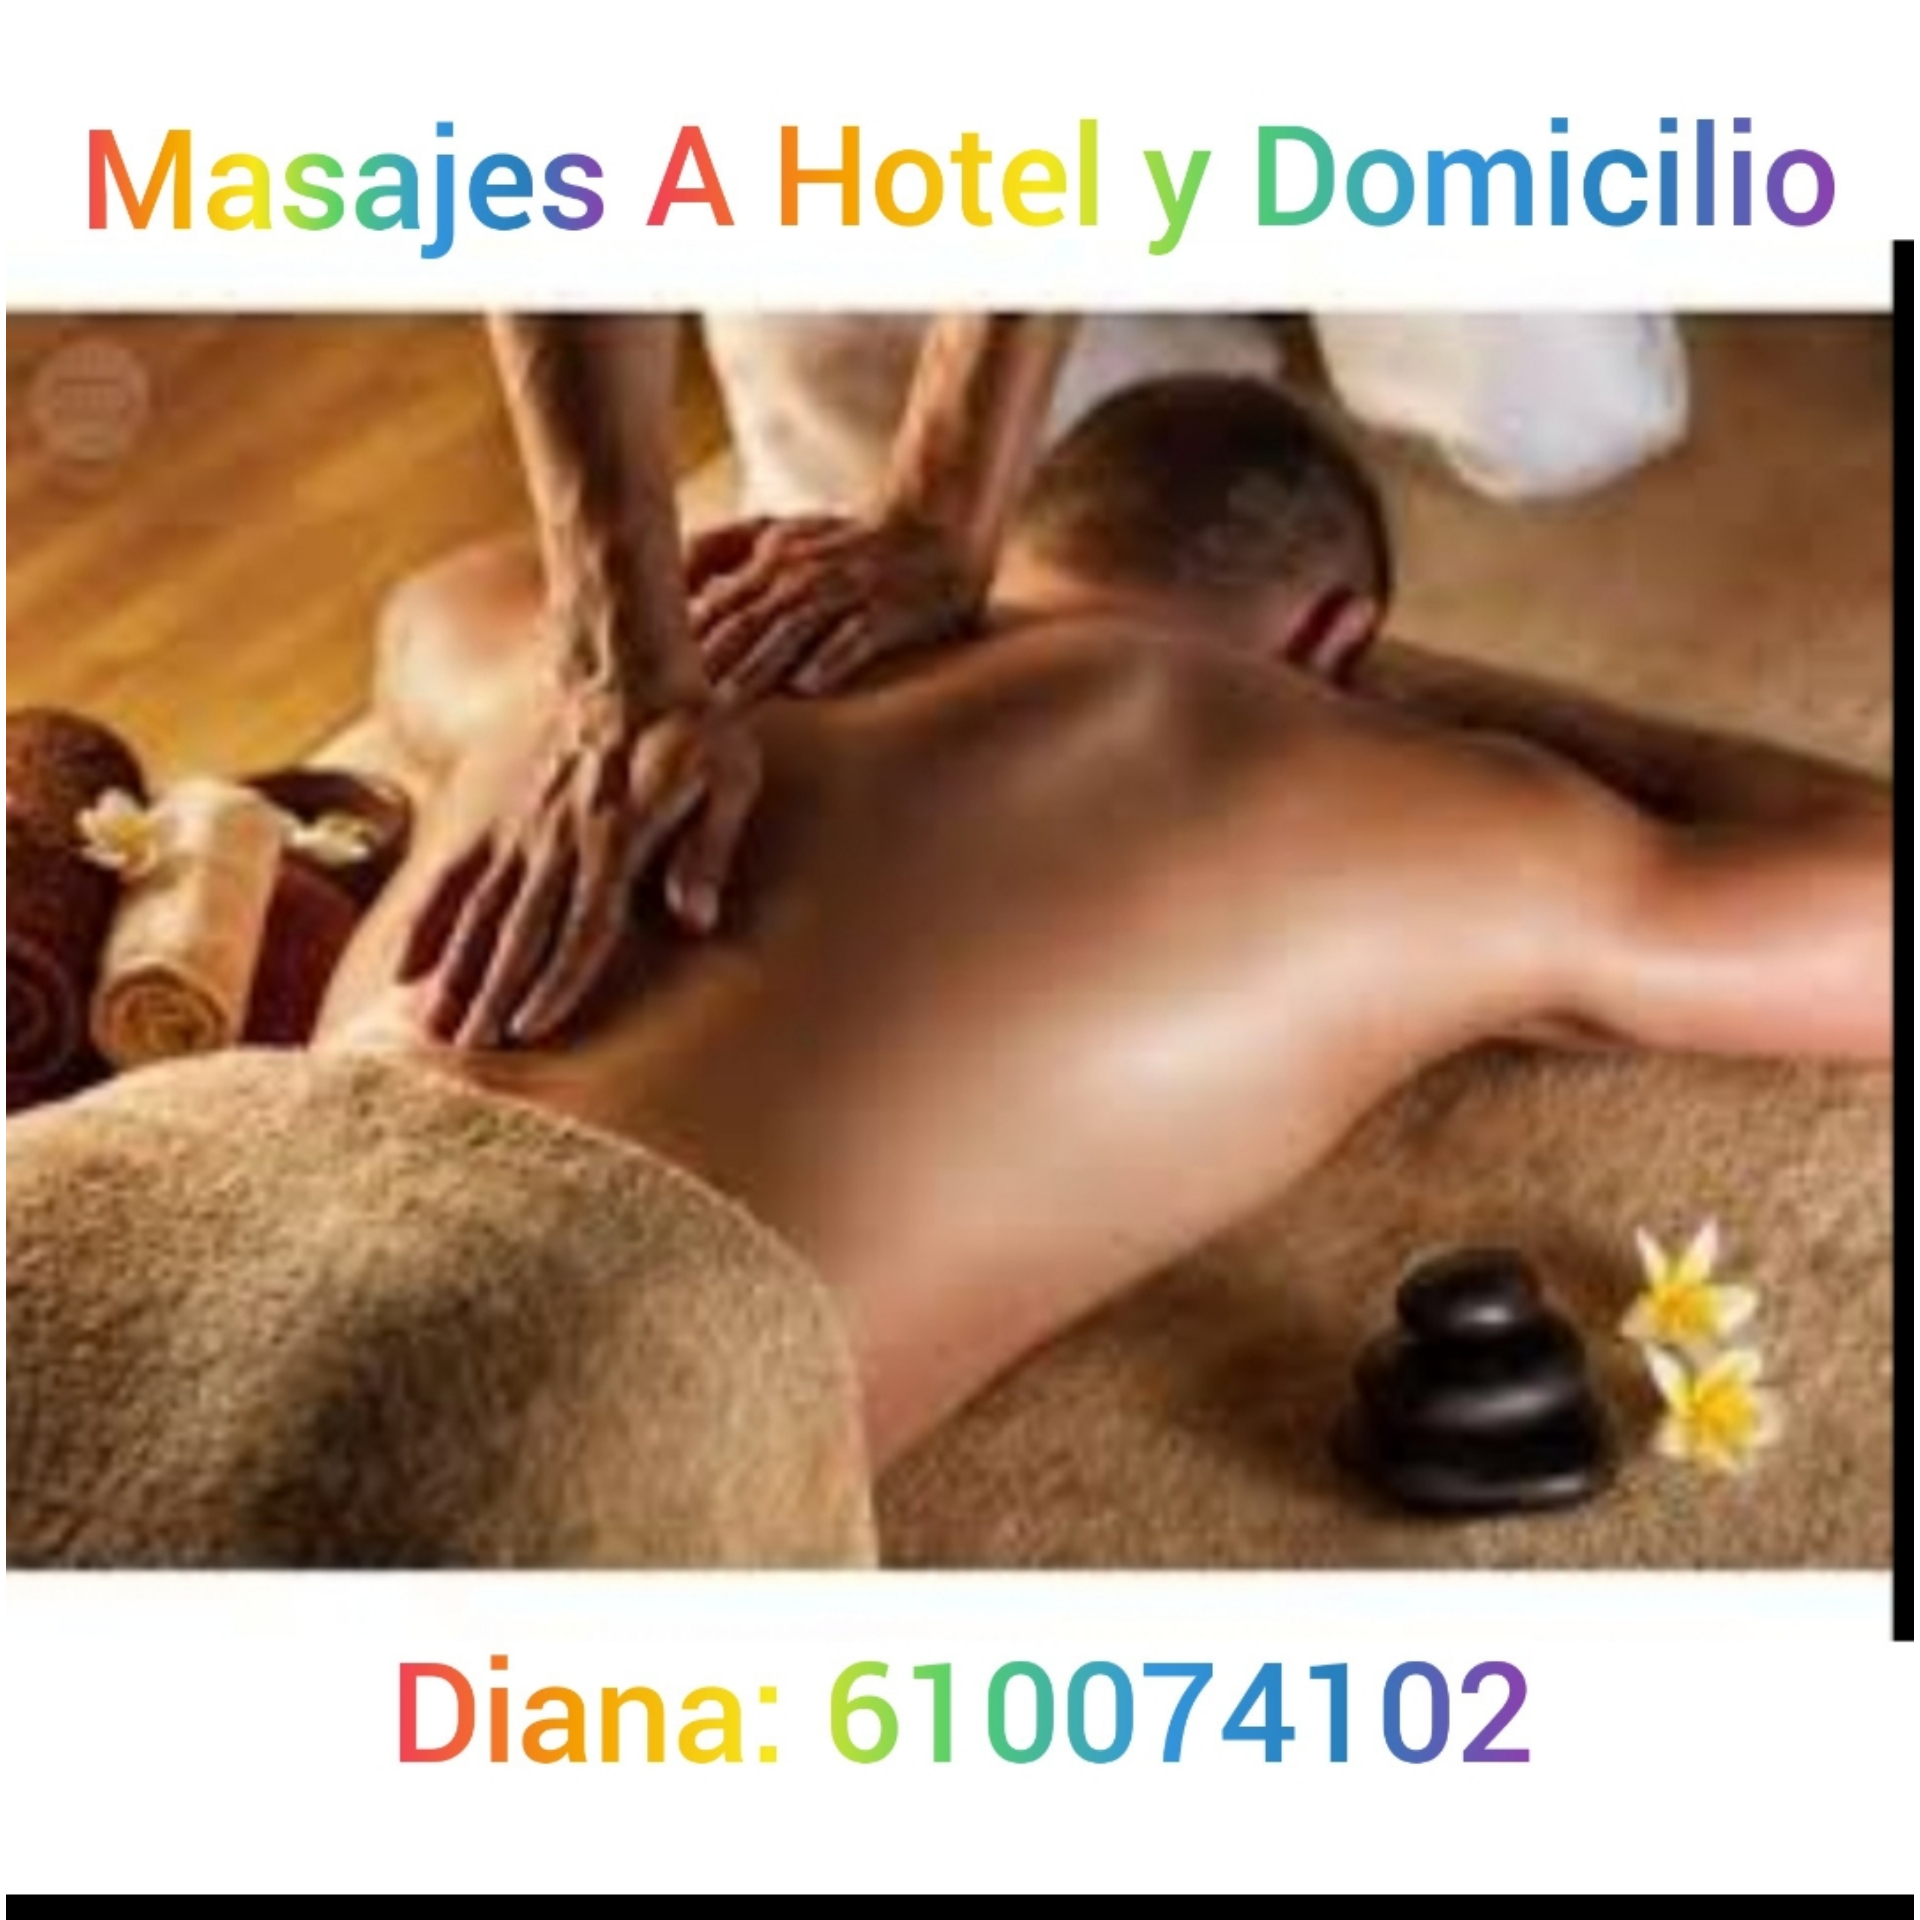 masajistas-terapeuticos madrid MASAJES HOTEL DOMICILIO Madrid 